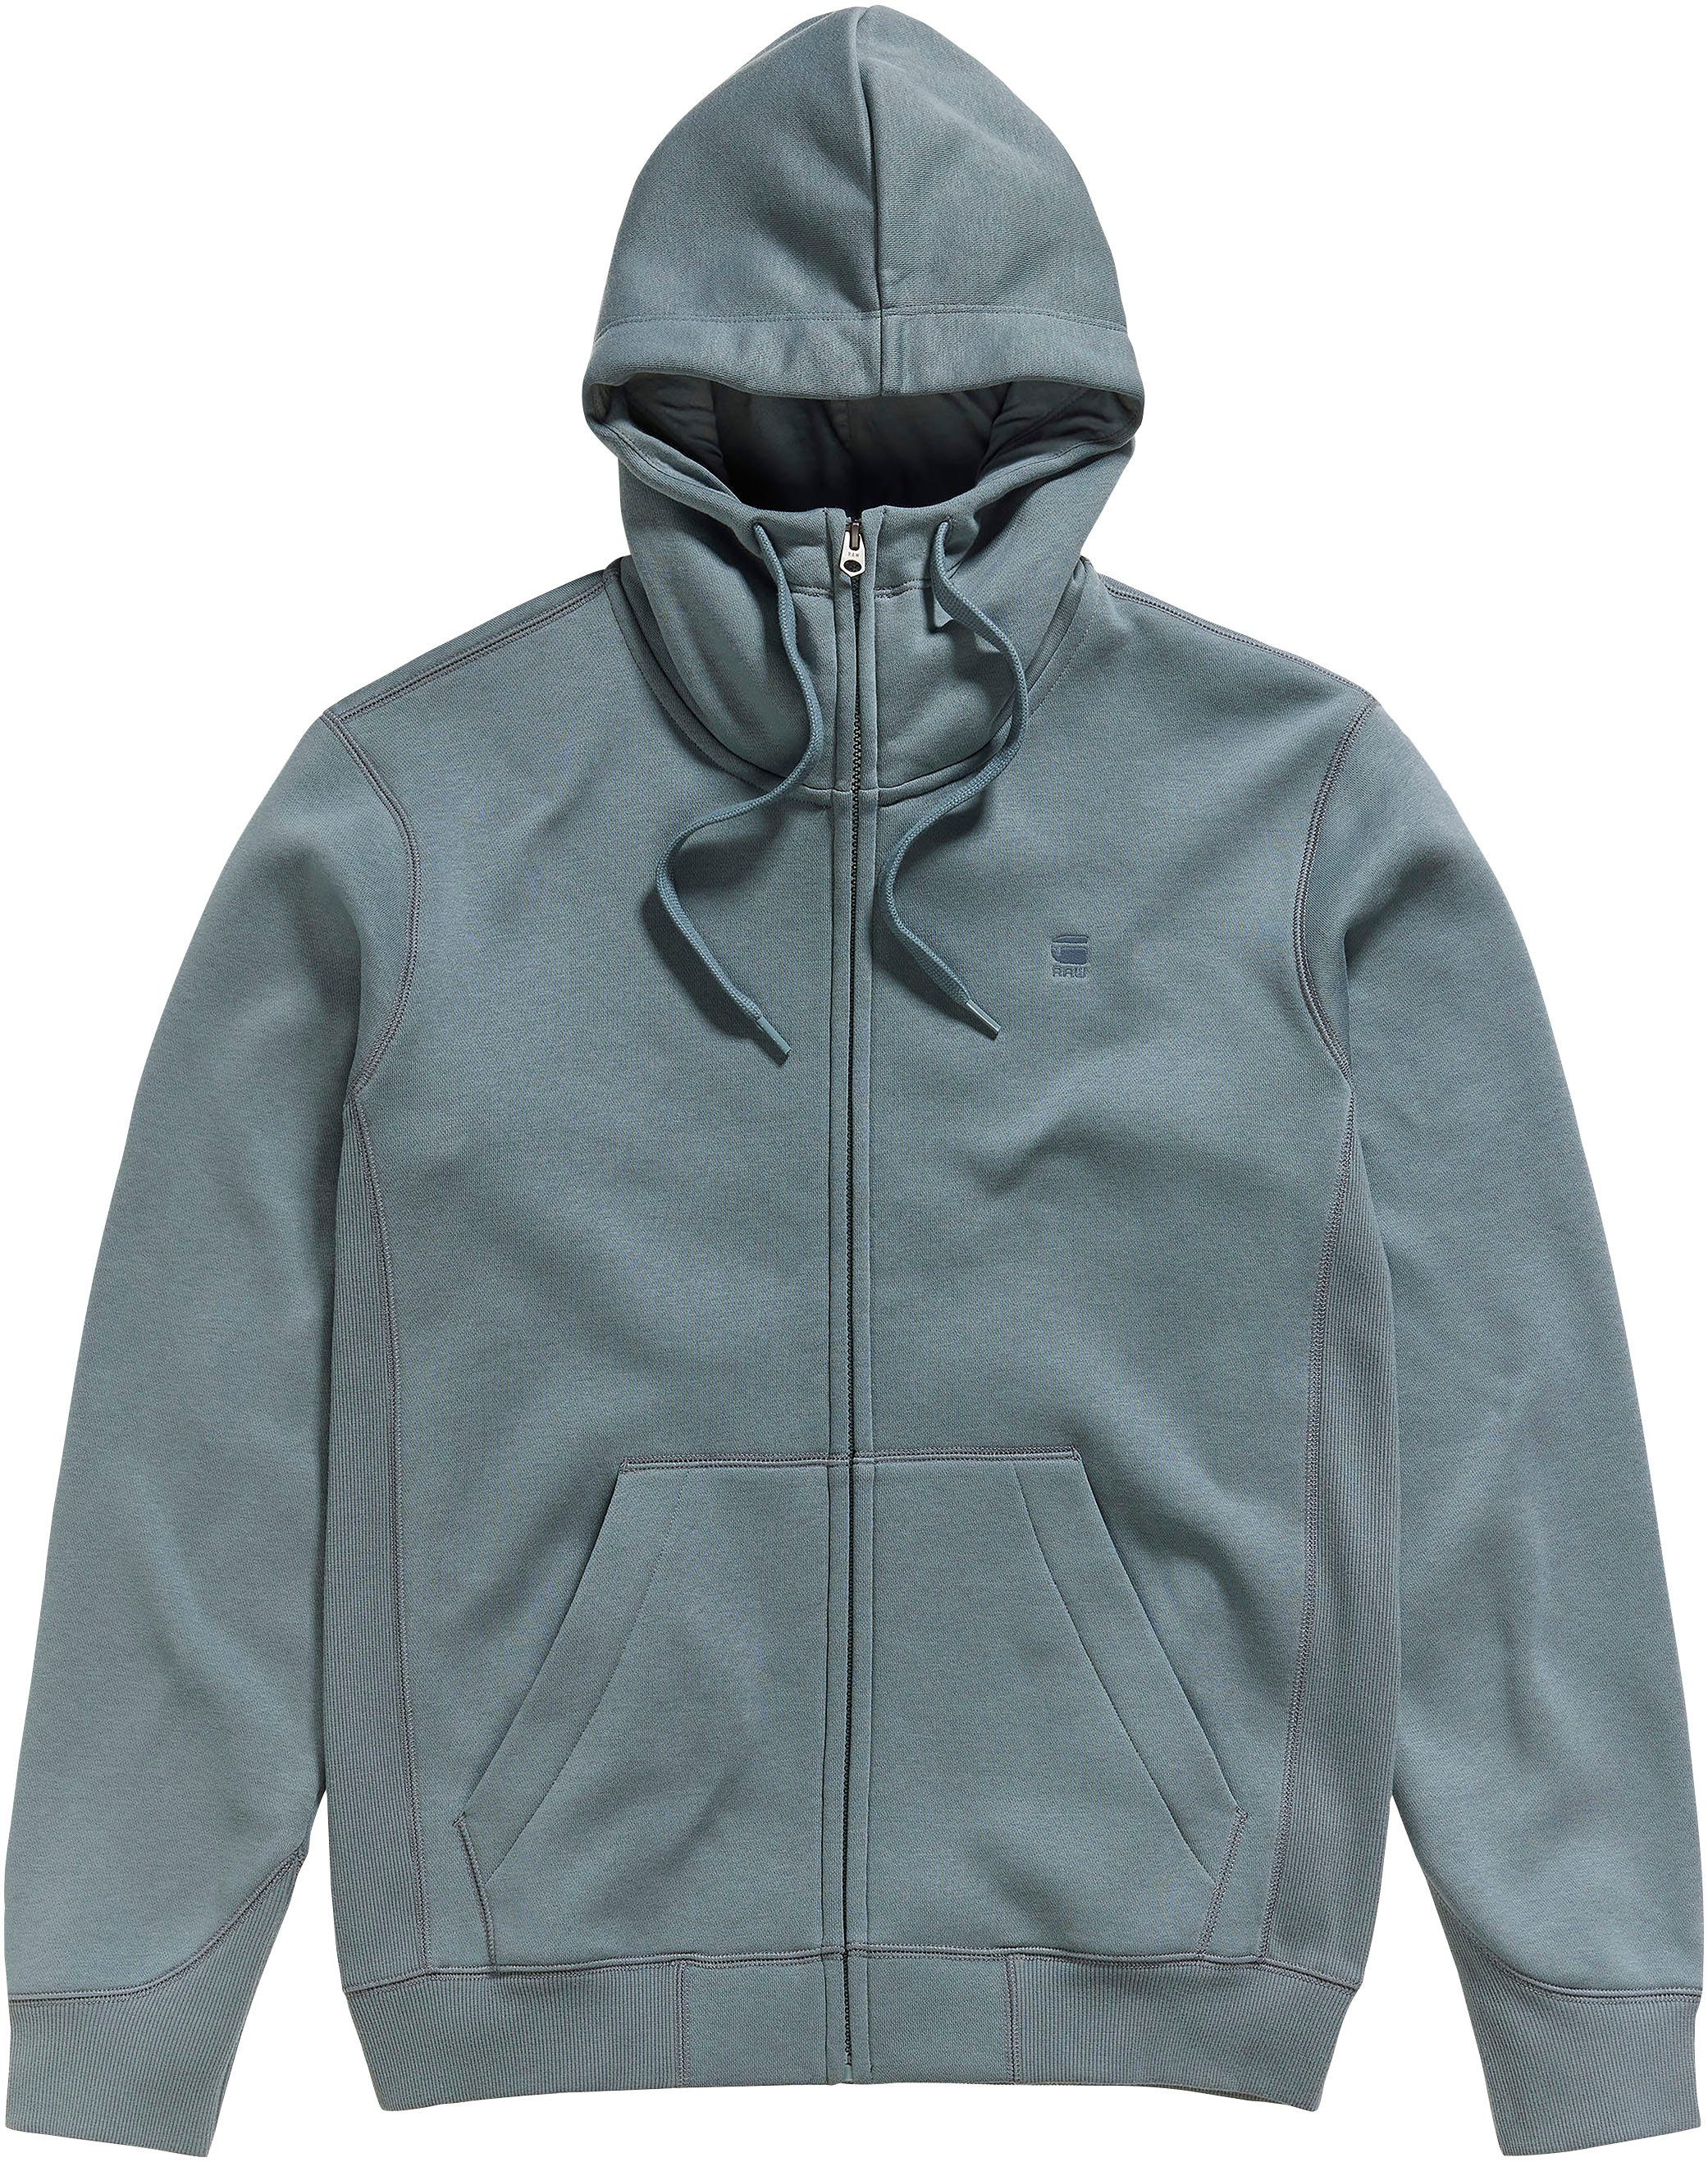 RAW Zip Sweater Hooded axis Kapuzensweatjacke G-Star Premium Basic